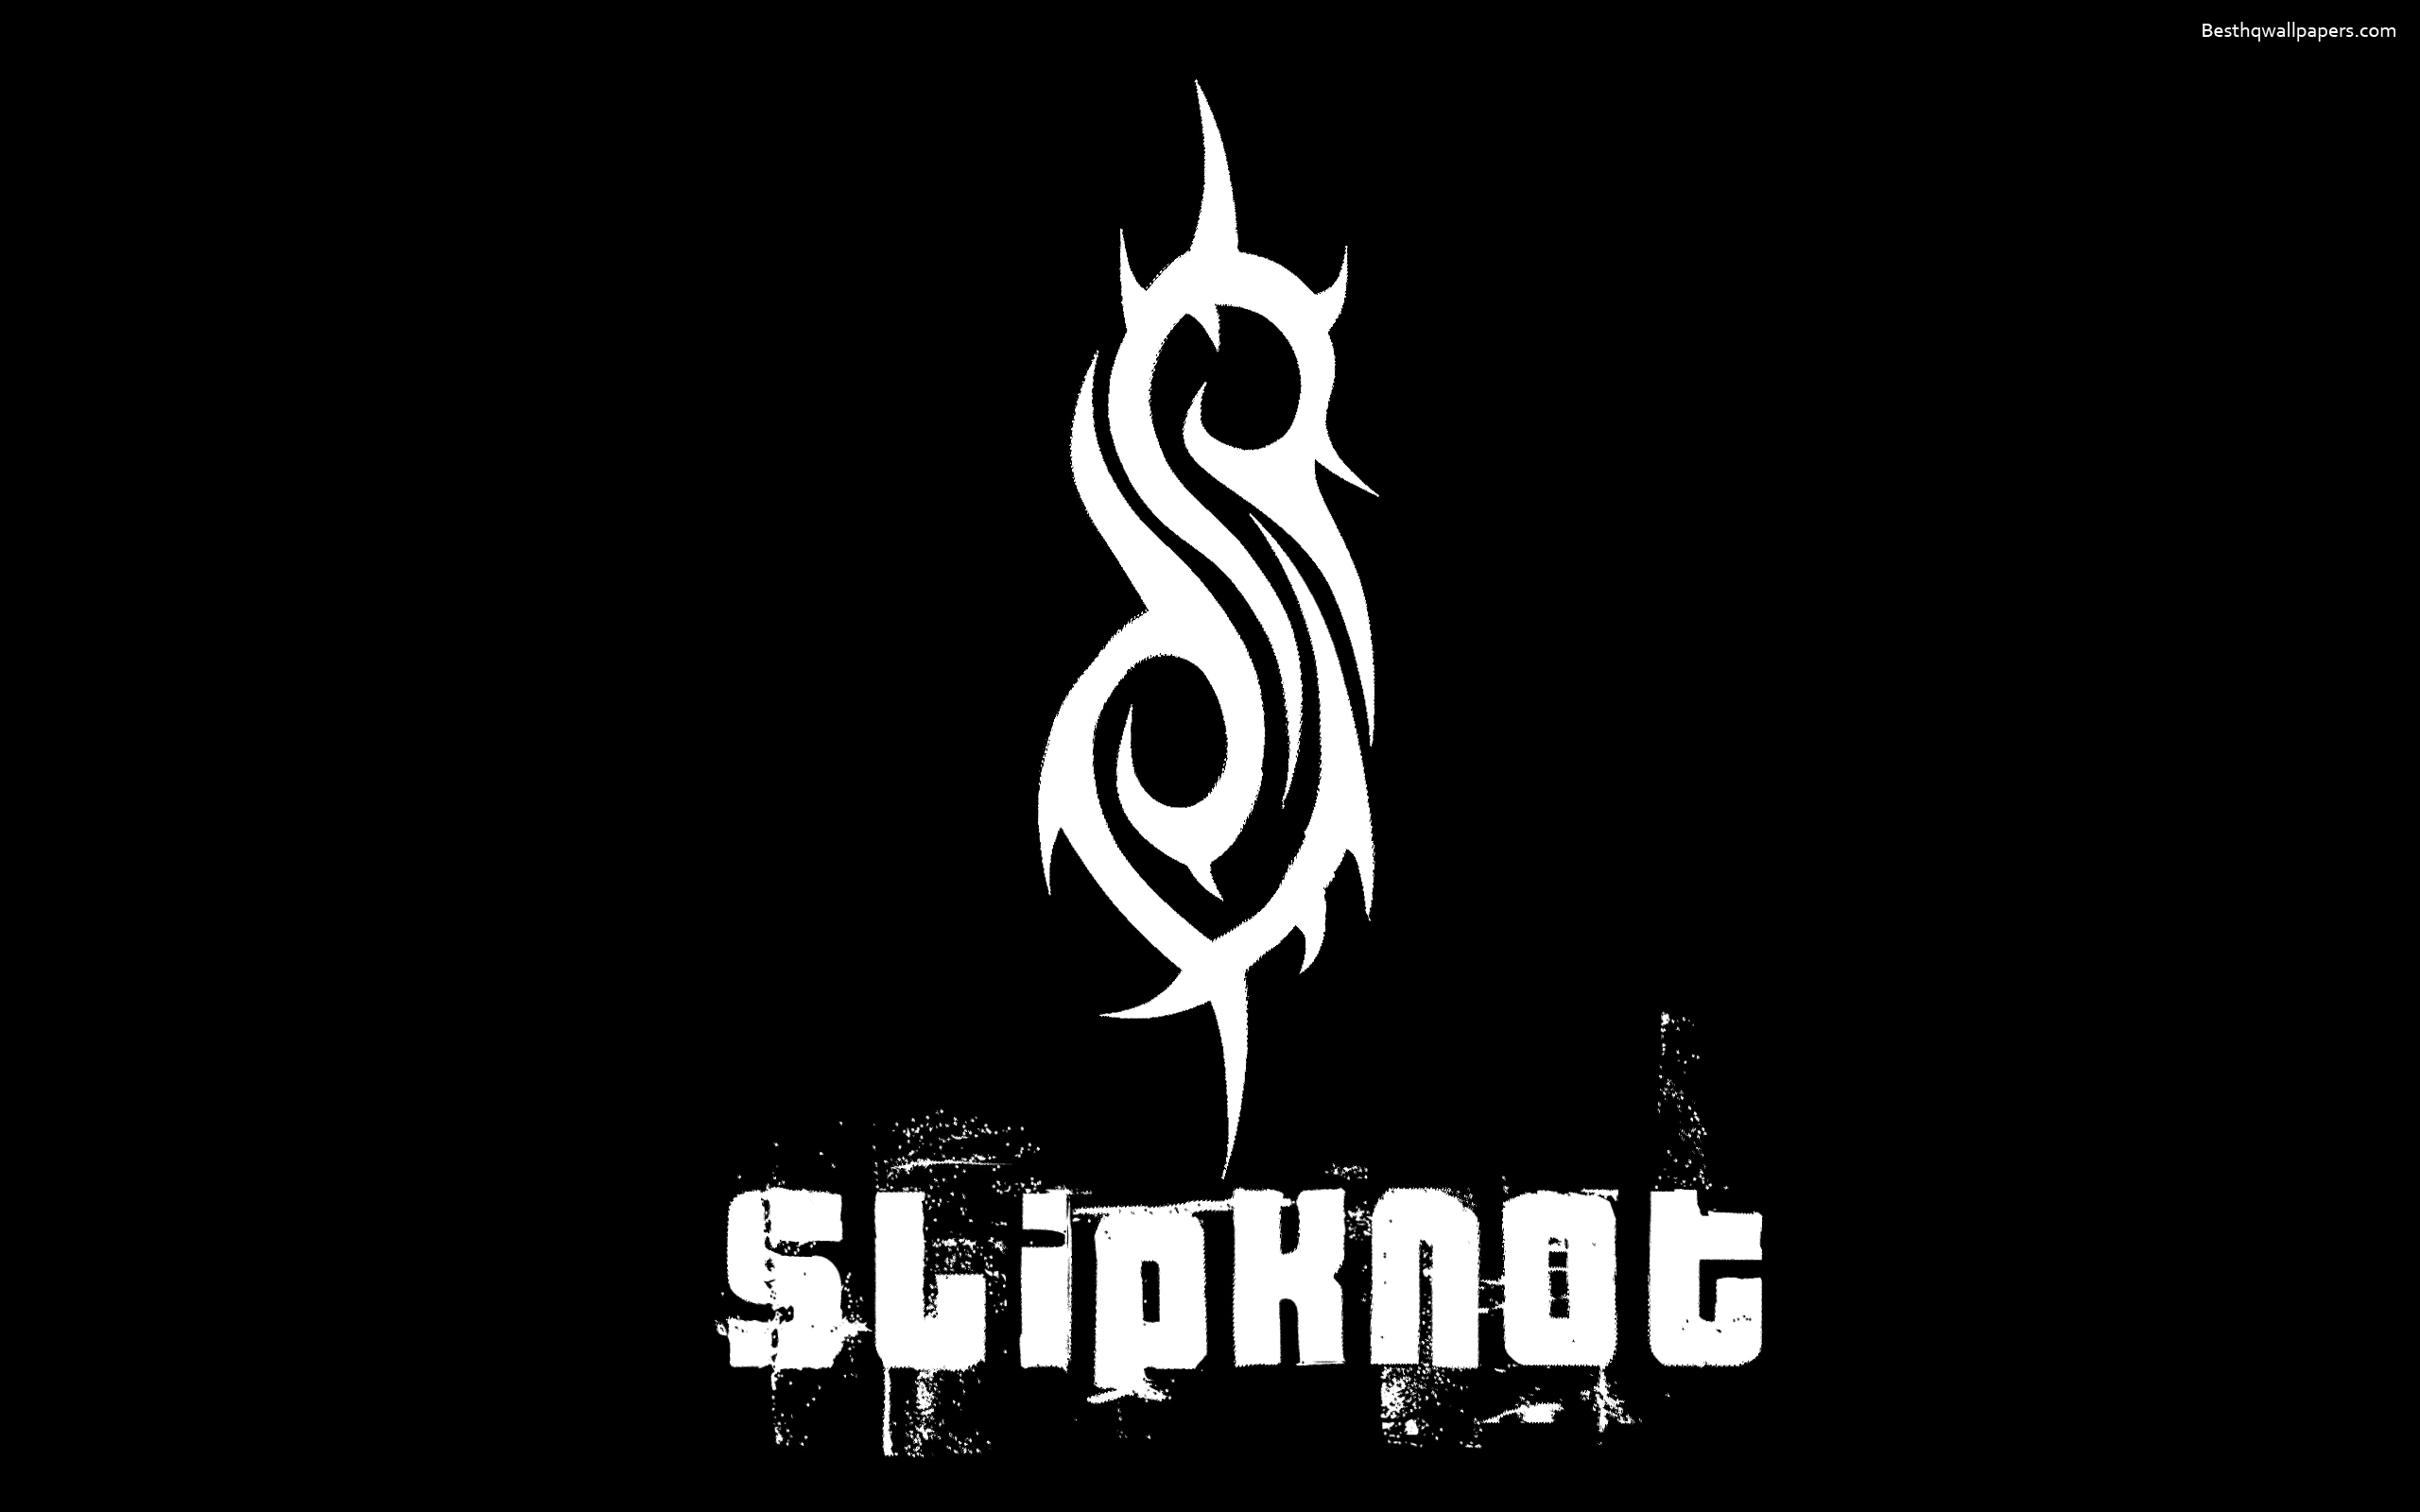 Download wallpaper Slipknot, black background, Slipknot logo, rock band, logo for desktop with resolution 2560x1600. High Quality HD picture wallpaper